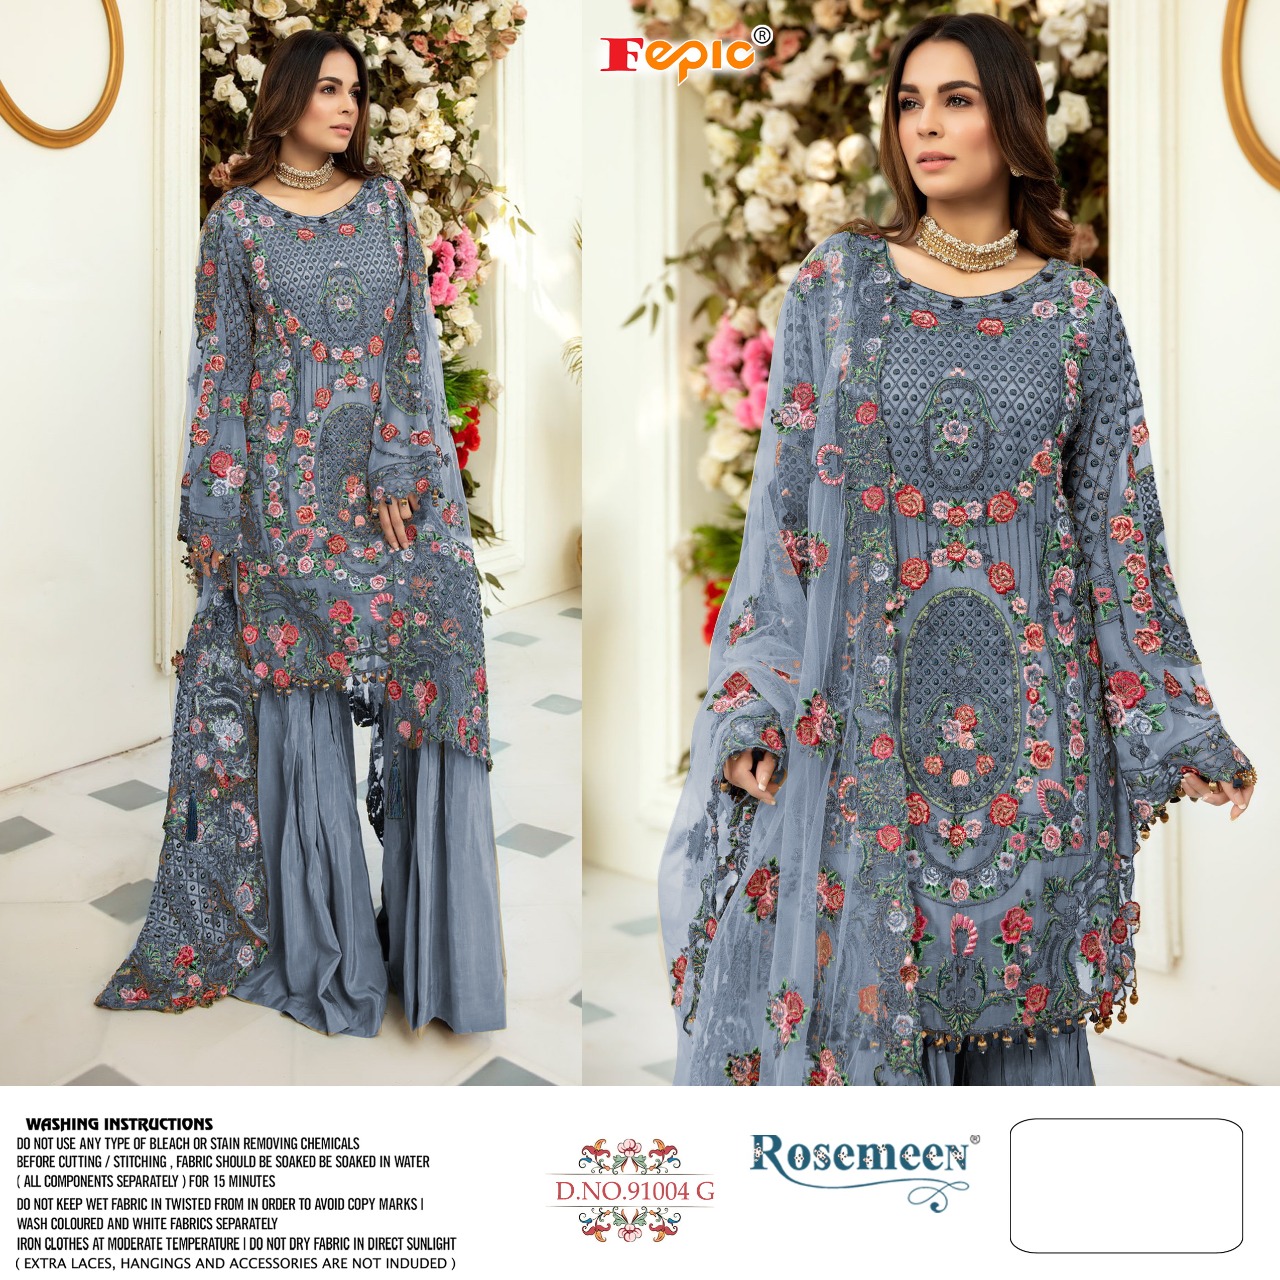 FEPIC Rosemeen 91004 G Salwar Kameez Net heavy embroidered Singles